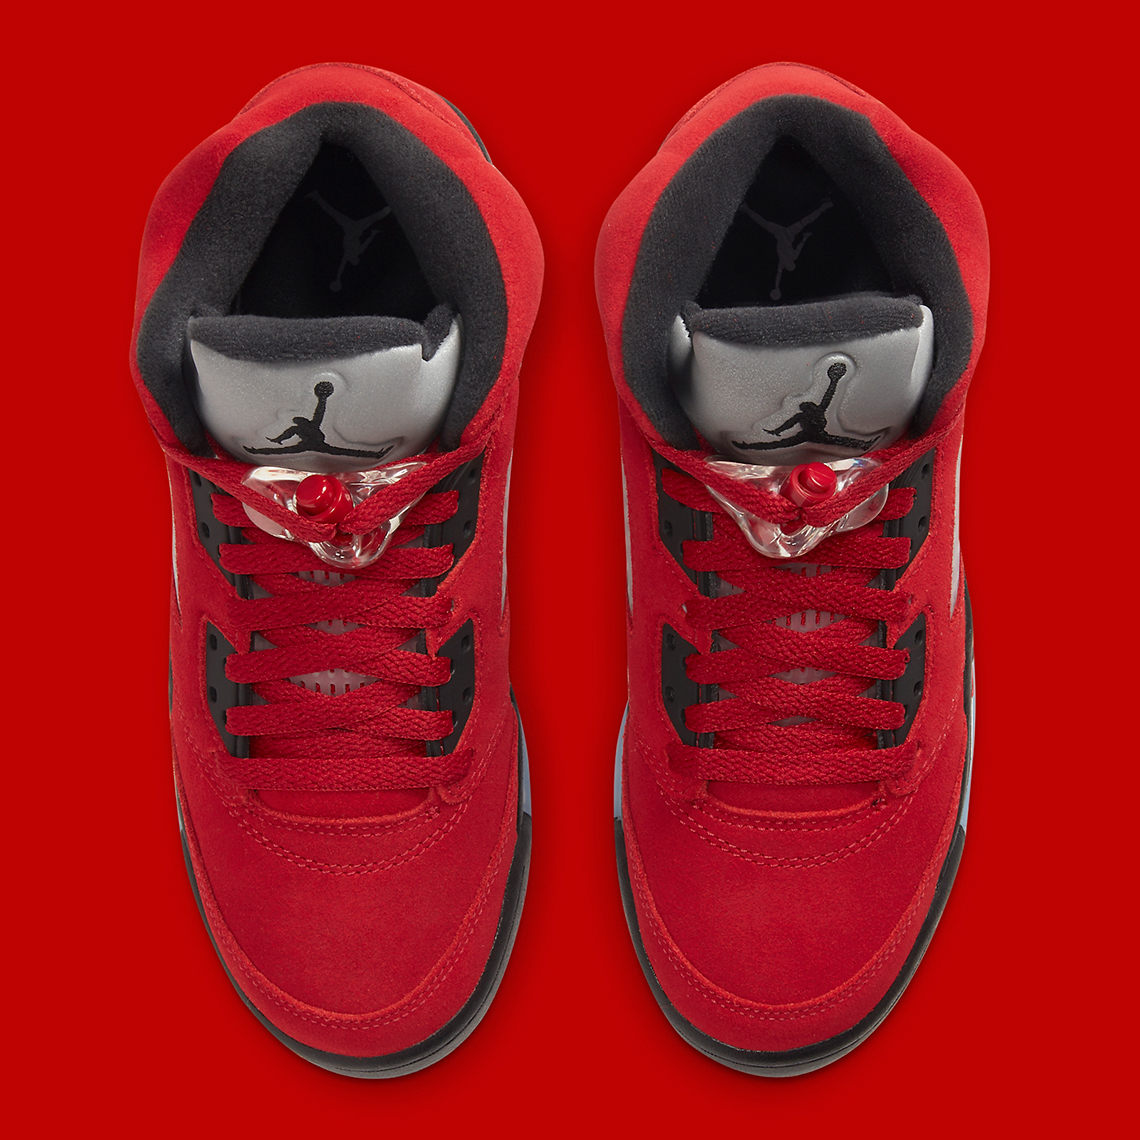 Milestone by direktør Air Jordan 5 Raging Bull 2021 Release Date | SneakerNews.com